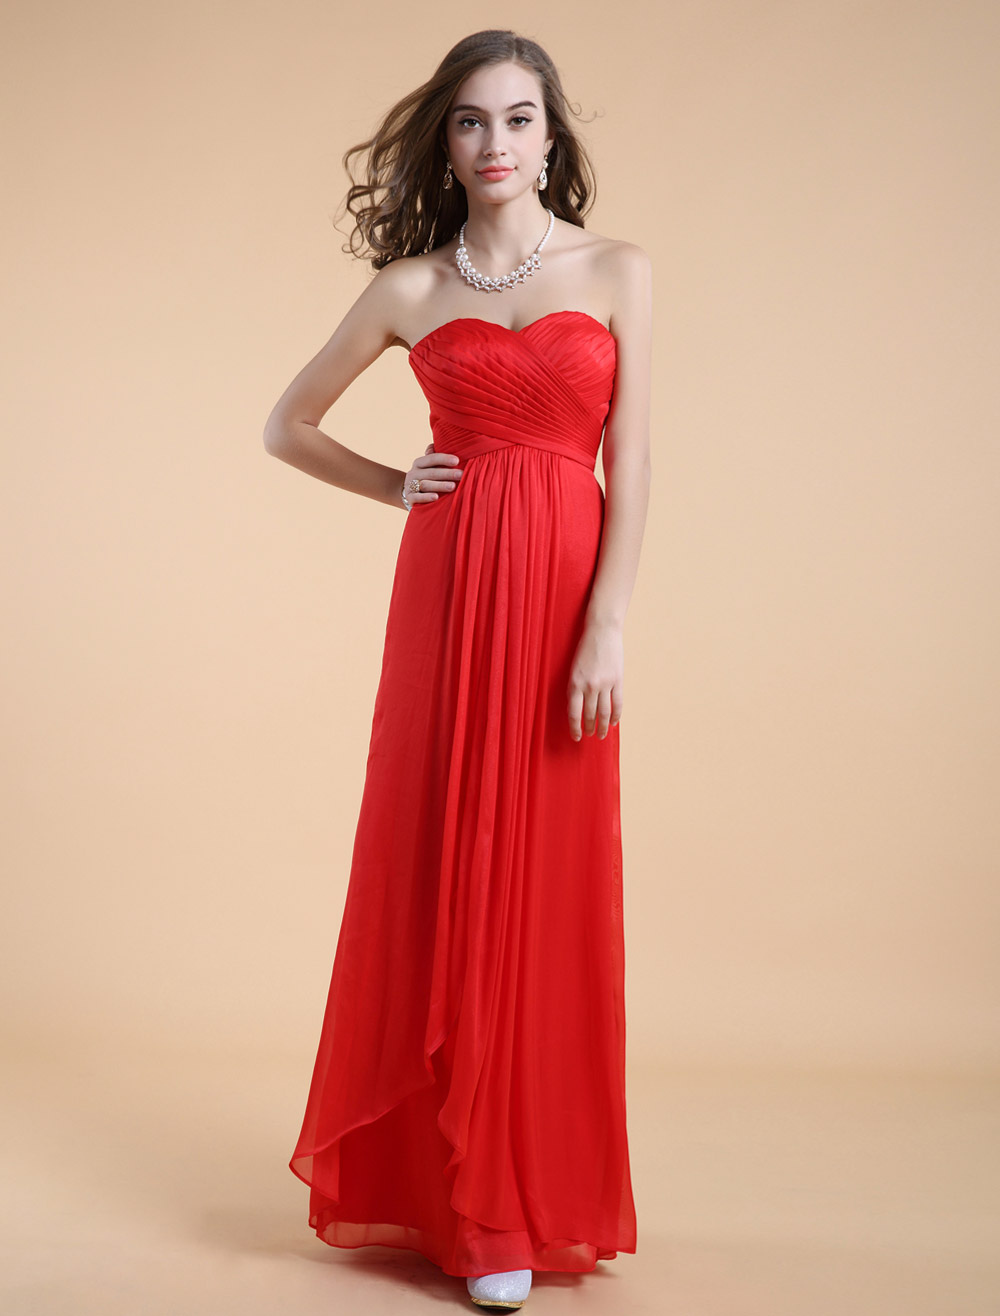 A-line Sweetheart Neck Cascading Ruffle Red Chiffon Bridesmaid Dress (Wedding Cheap Party Dress) photo